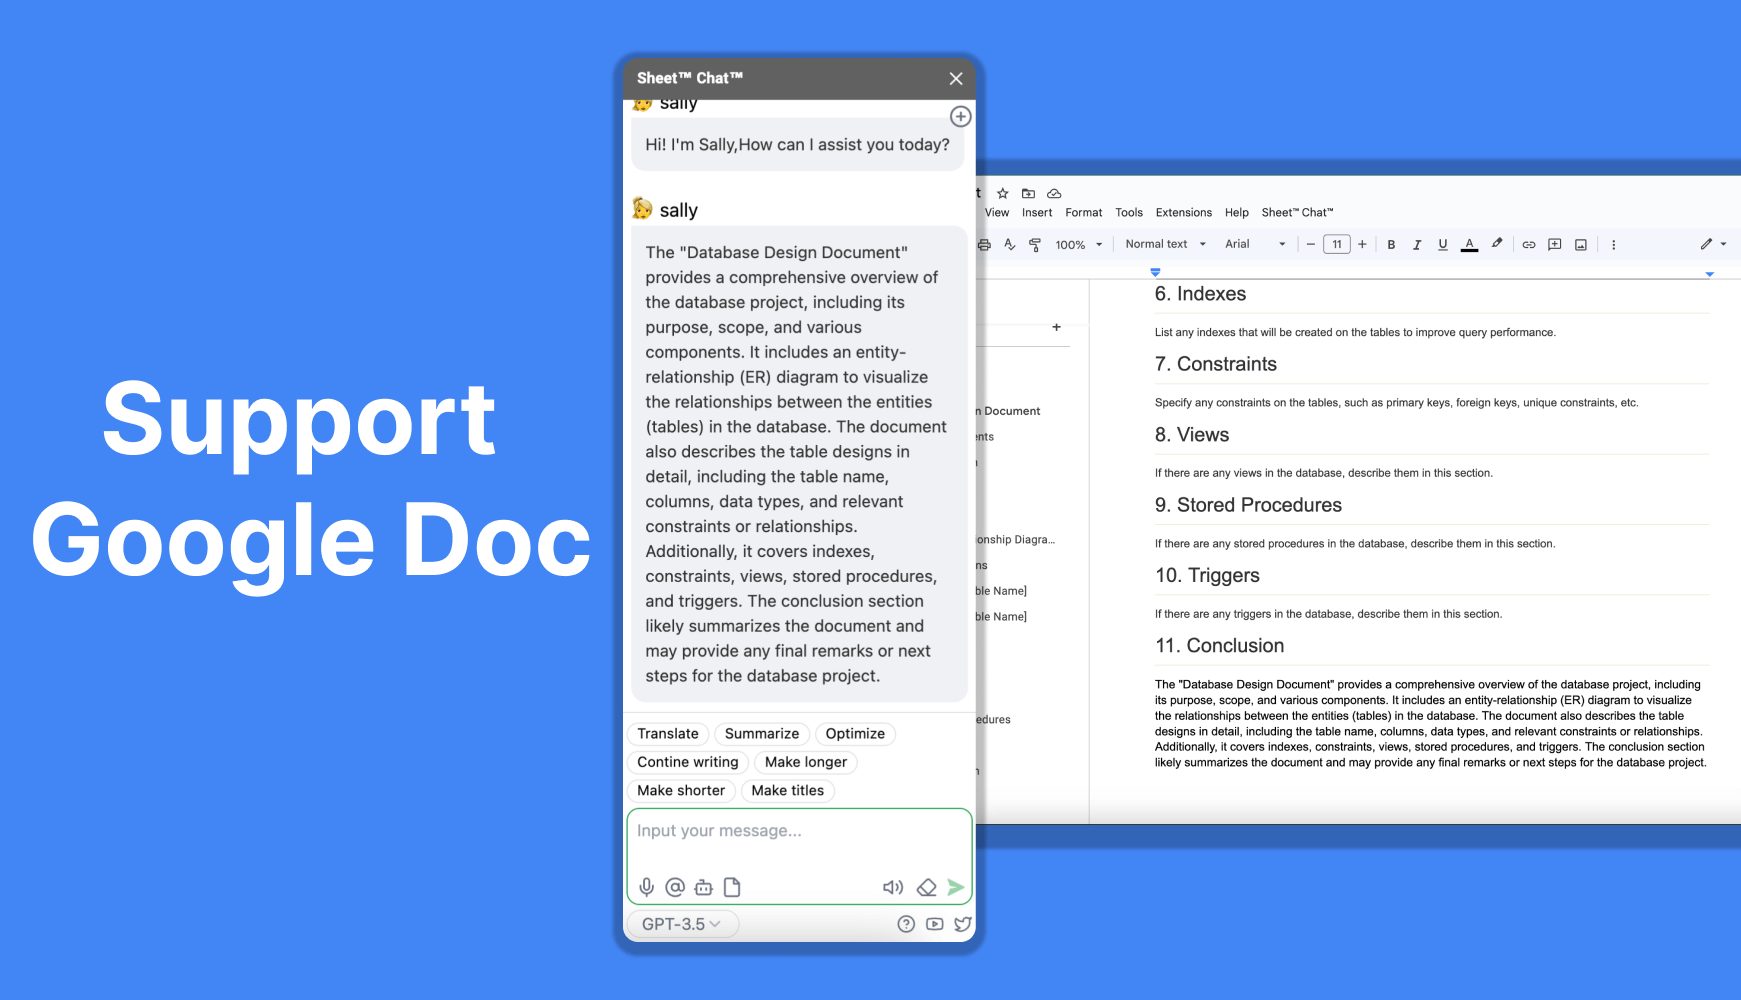 Support Google Doc